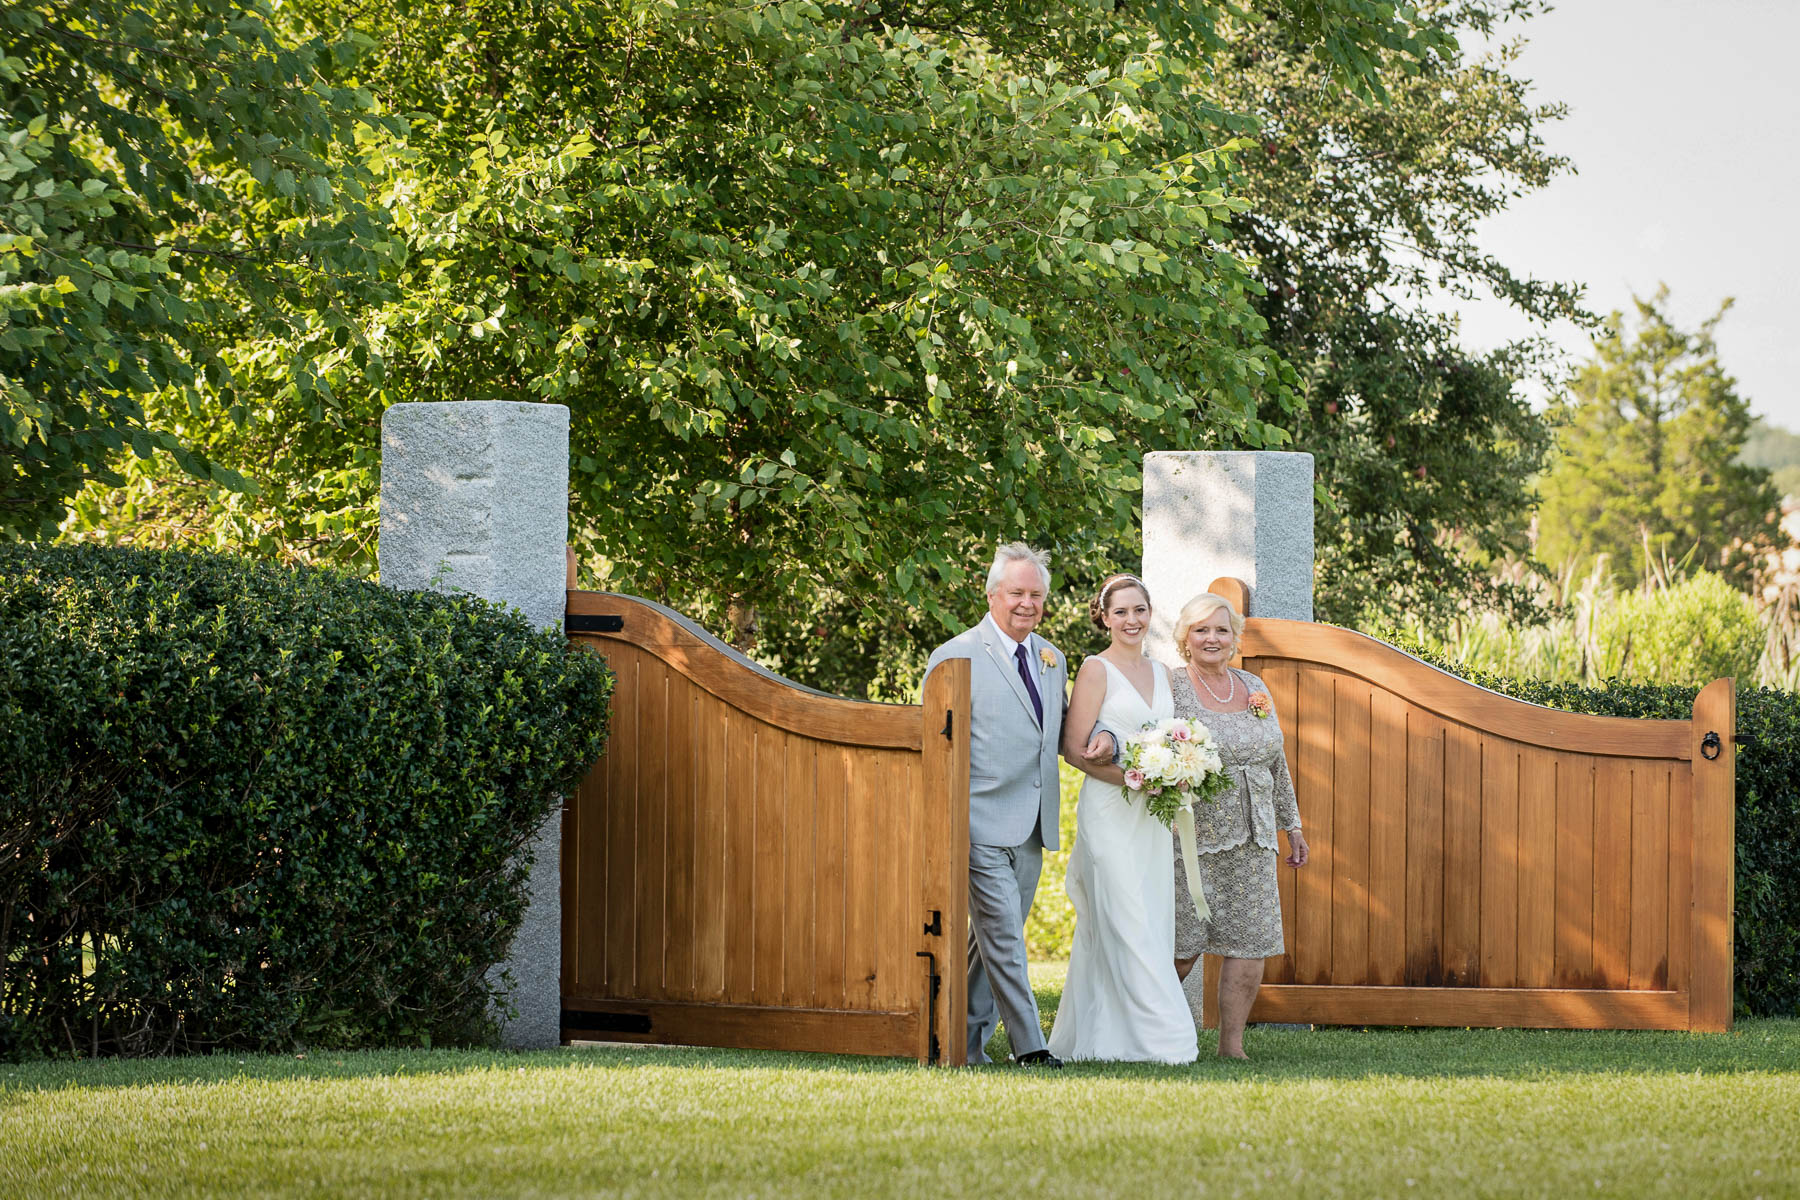  Bridal entrance at Saltwater Farm Vinyards